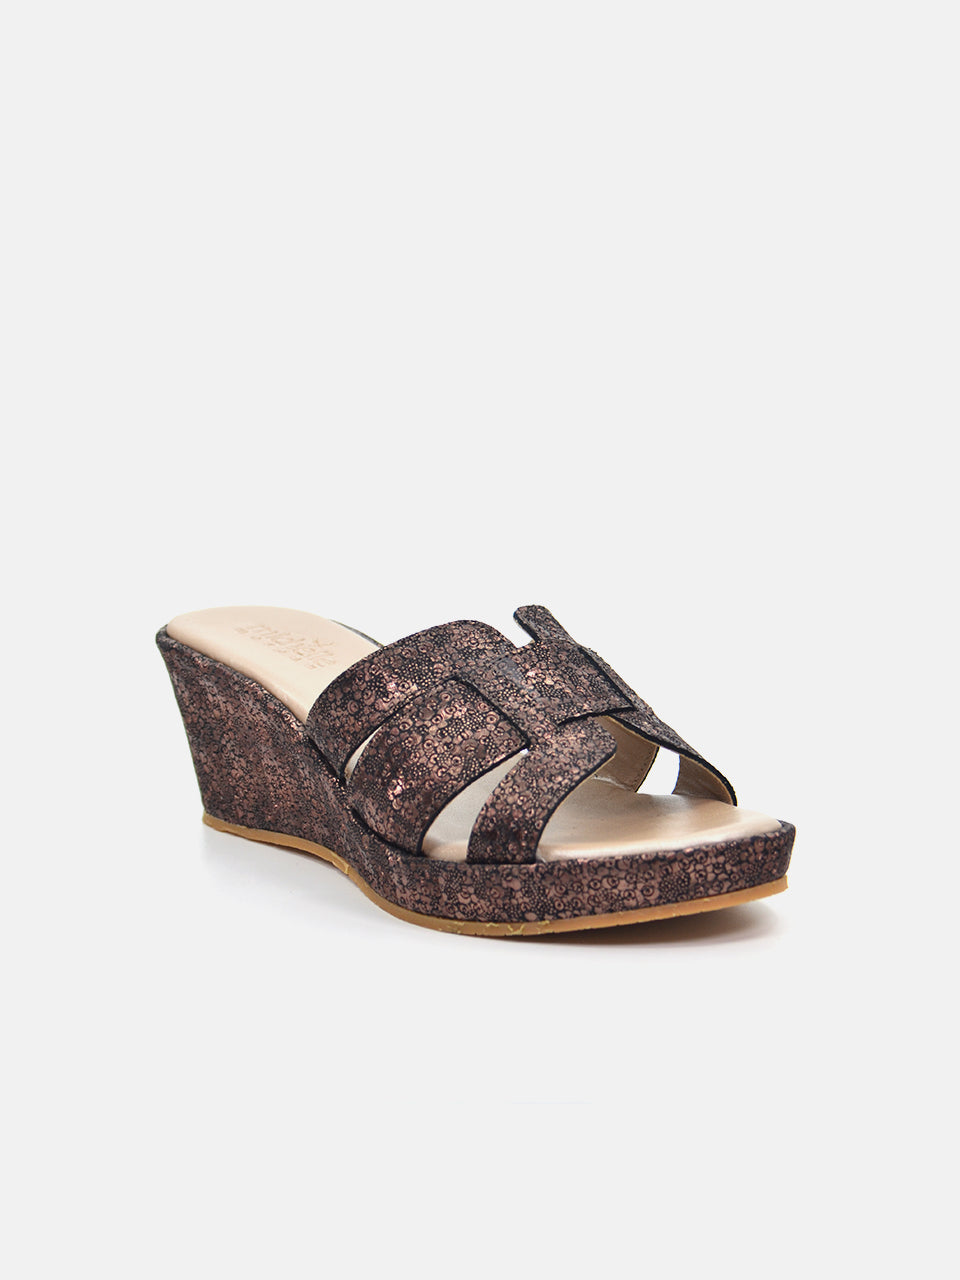 Michelle Morgan MM-301 Women's Wedge Sandals #color_Brown